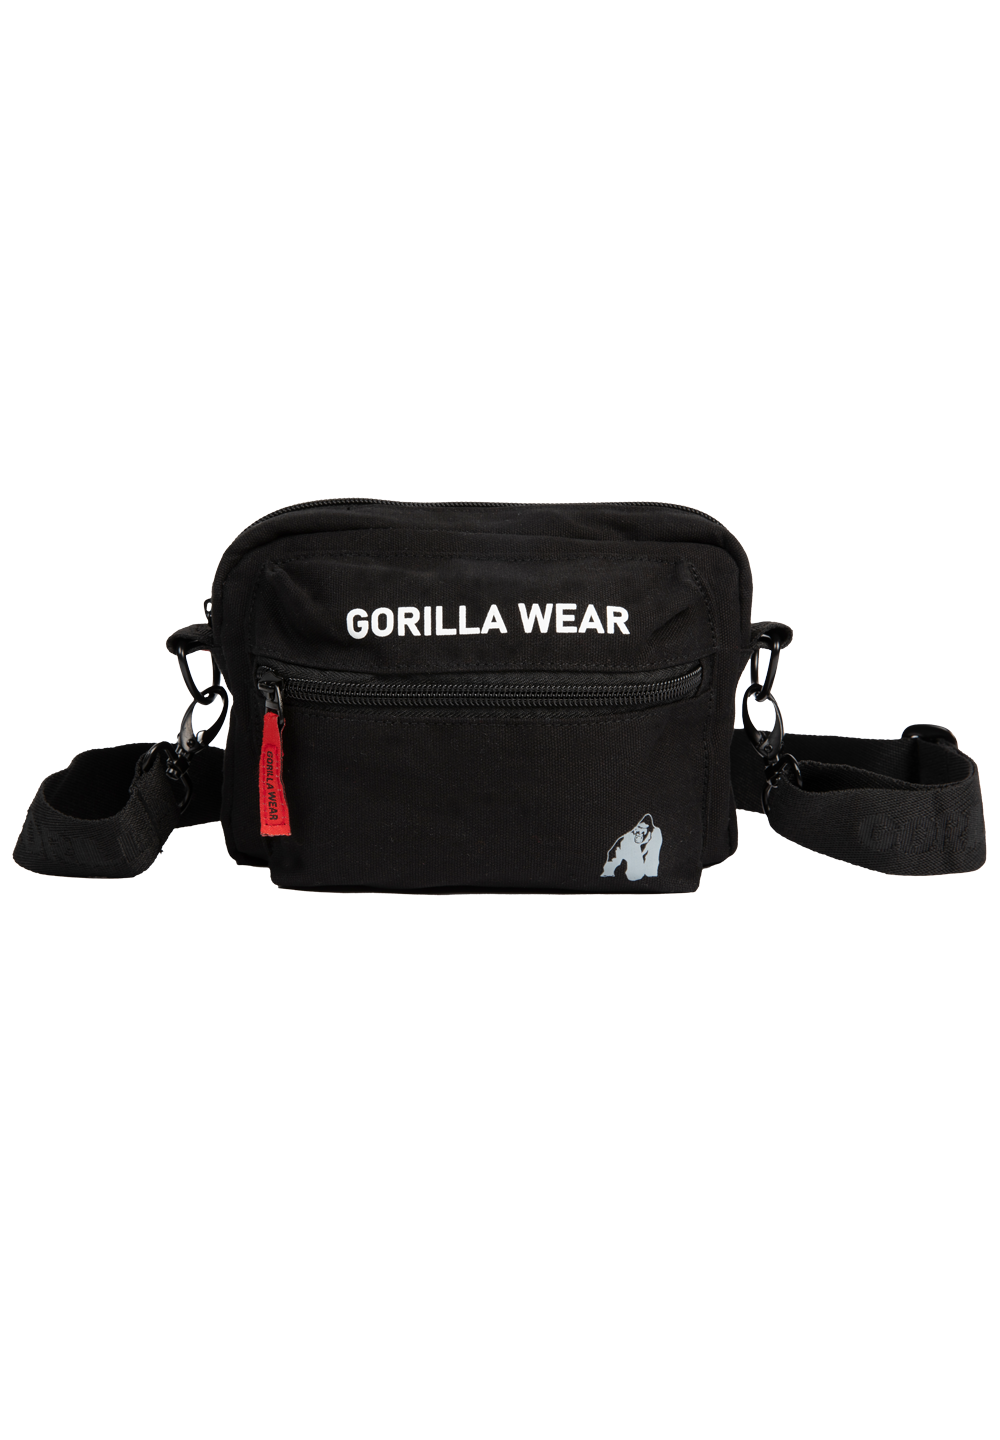 Gorilla Wear Brighton Crossbody Bag - Musta